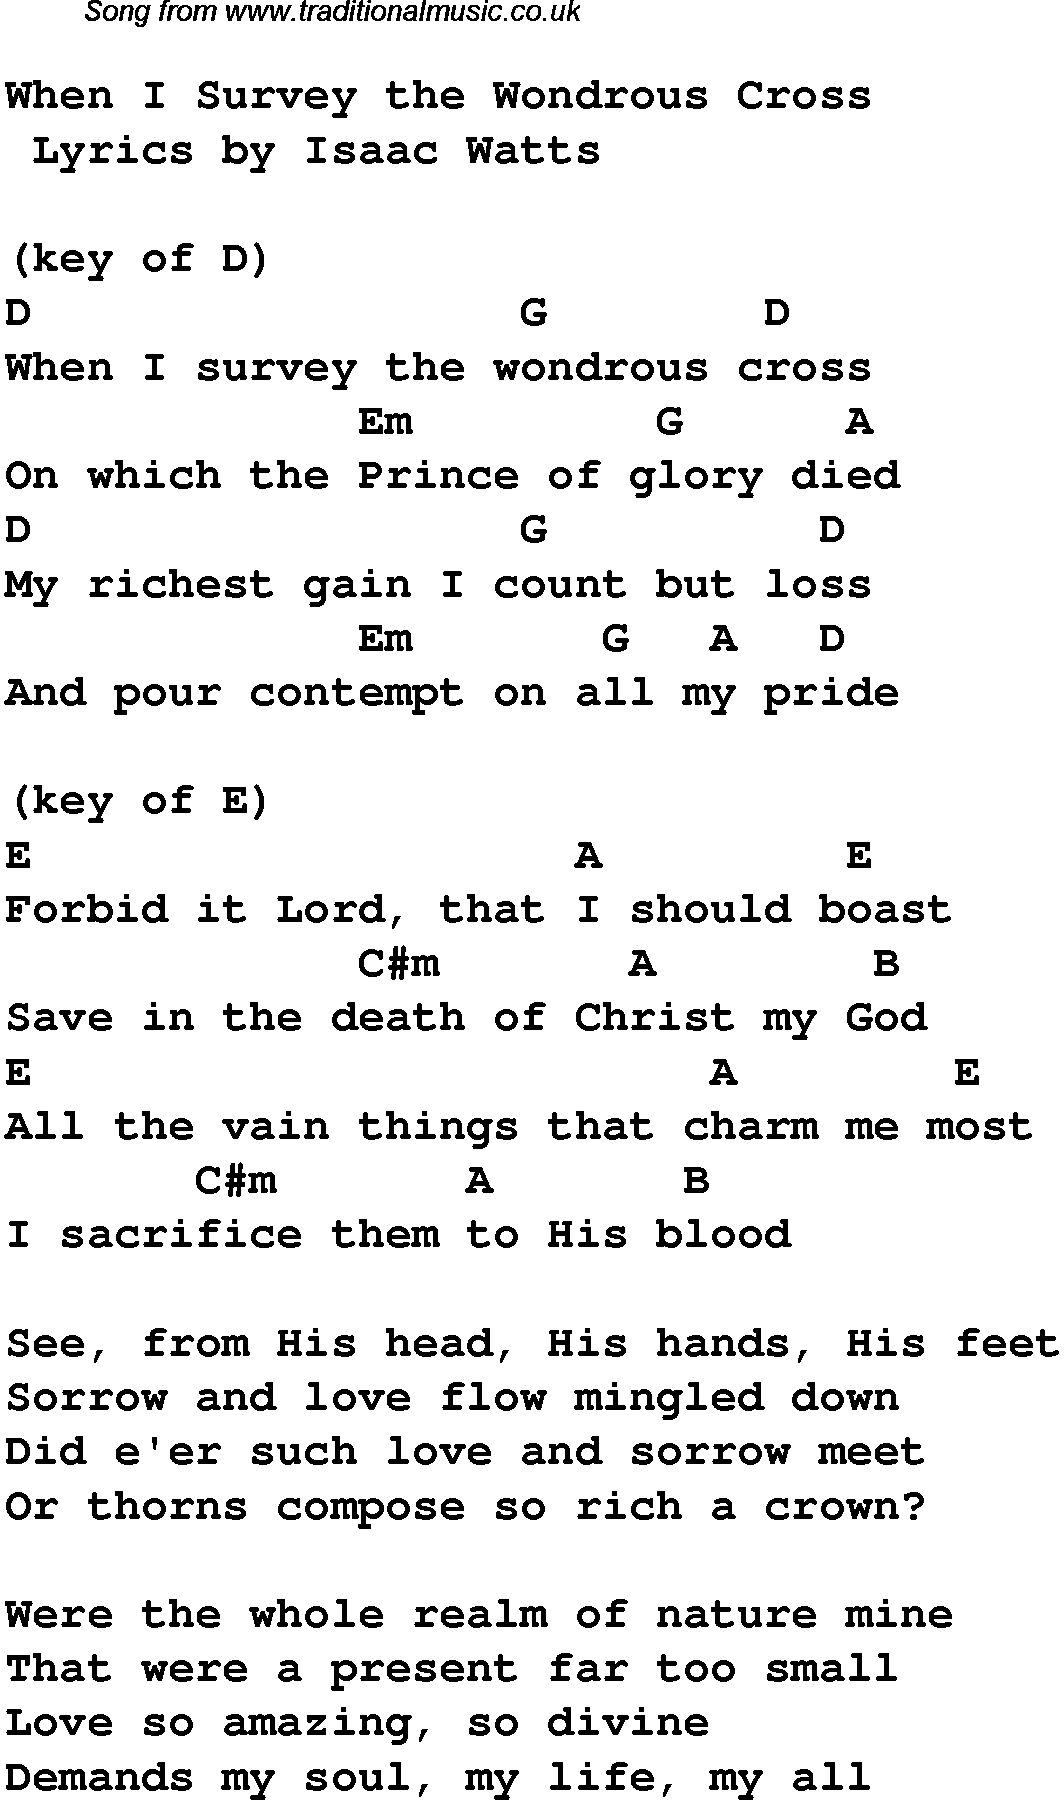 Gospel Song: when-i-survey-the-wondrous-cross, lyrics and chords.